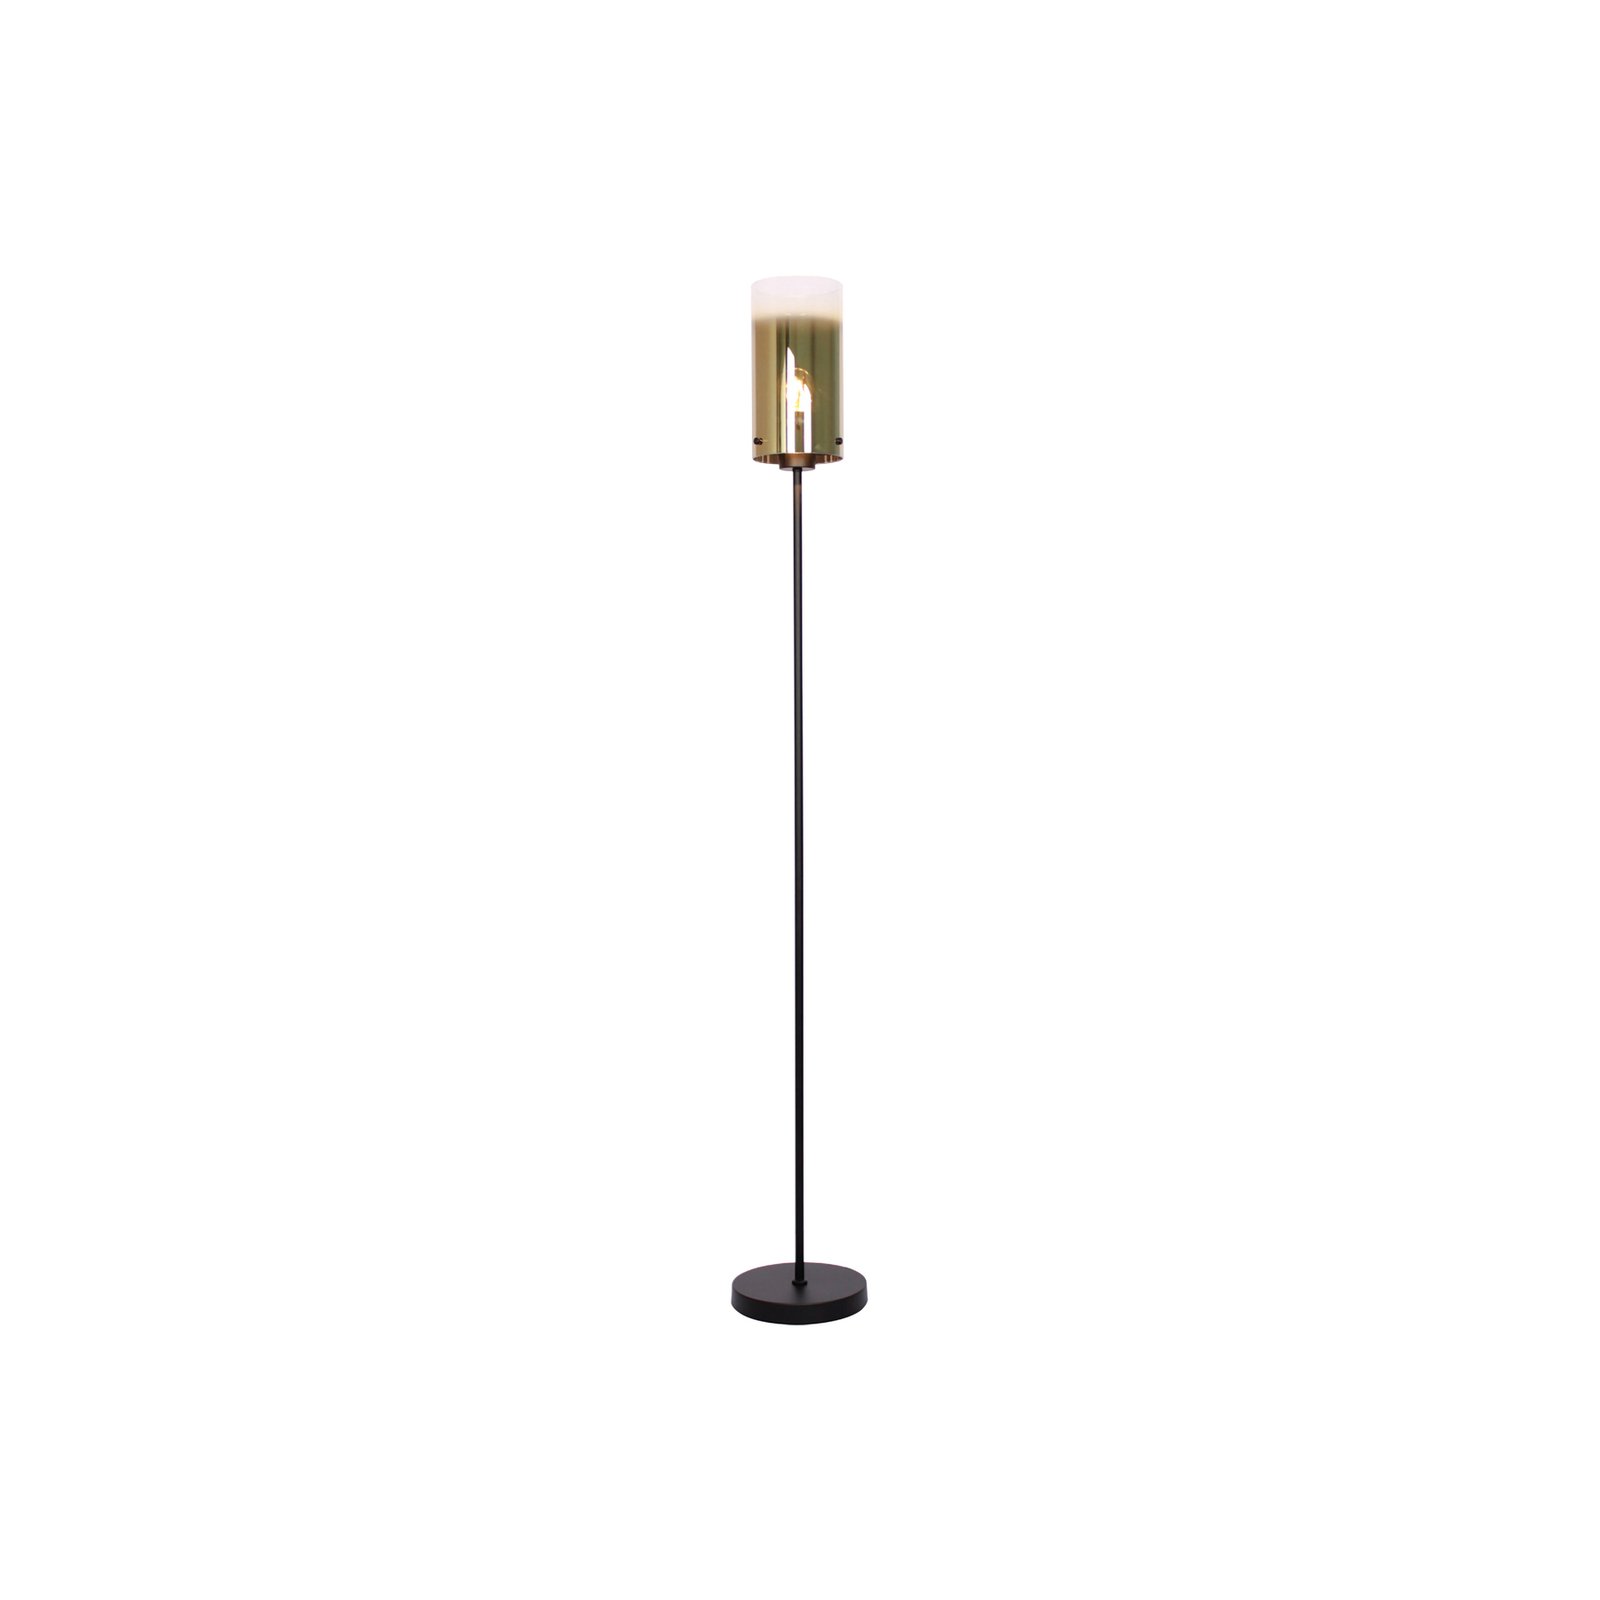 Ventotto φωτιστικό δαπέδου, μαύρο/χρυσό, ύψος 165 cm, μέταλλο/γυαλί